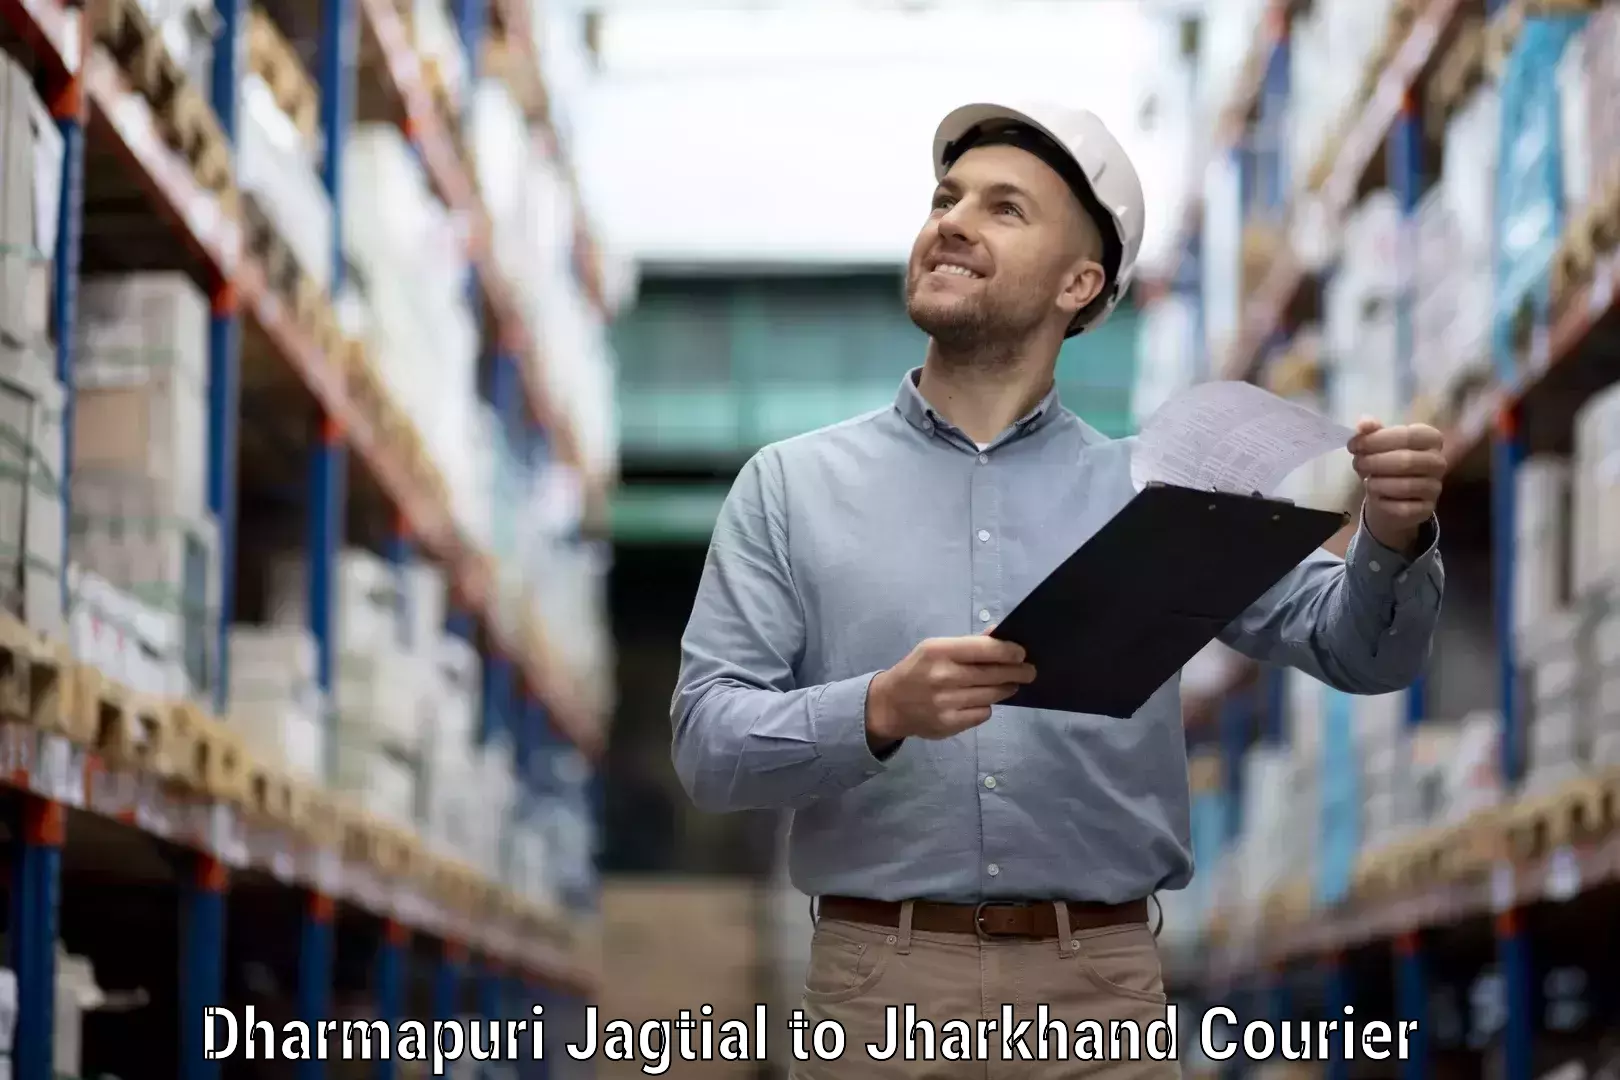 Reliable delivery network Dharmapuri Jagtial to Gomoh